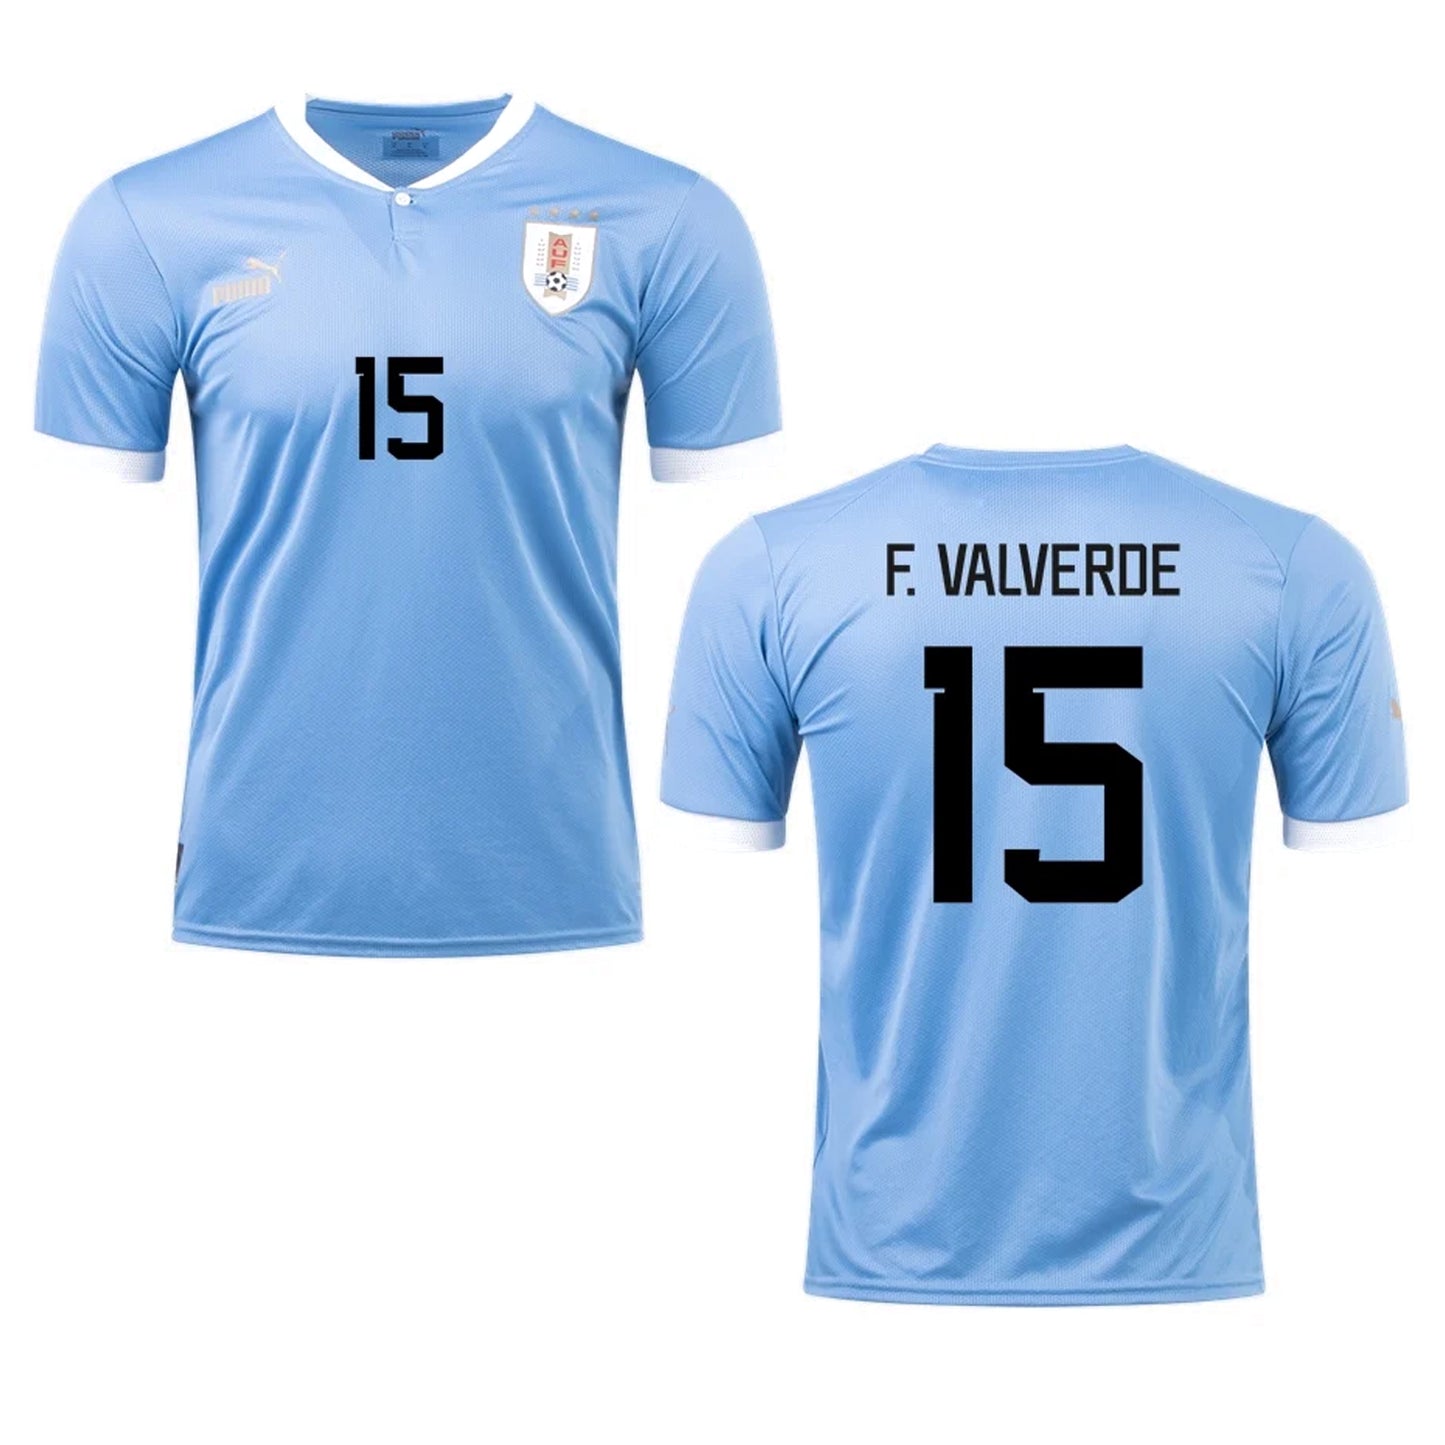 Federico Valverde Uruguay 15 FIFA World Cup Jersey